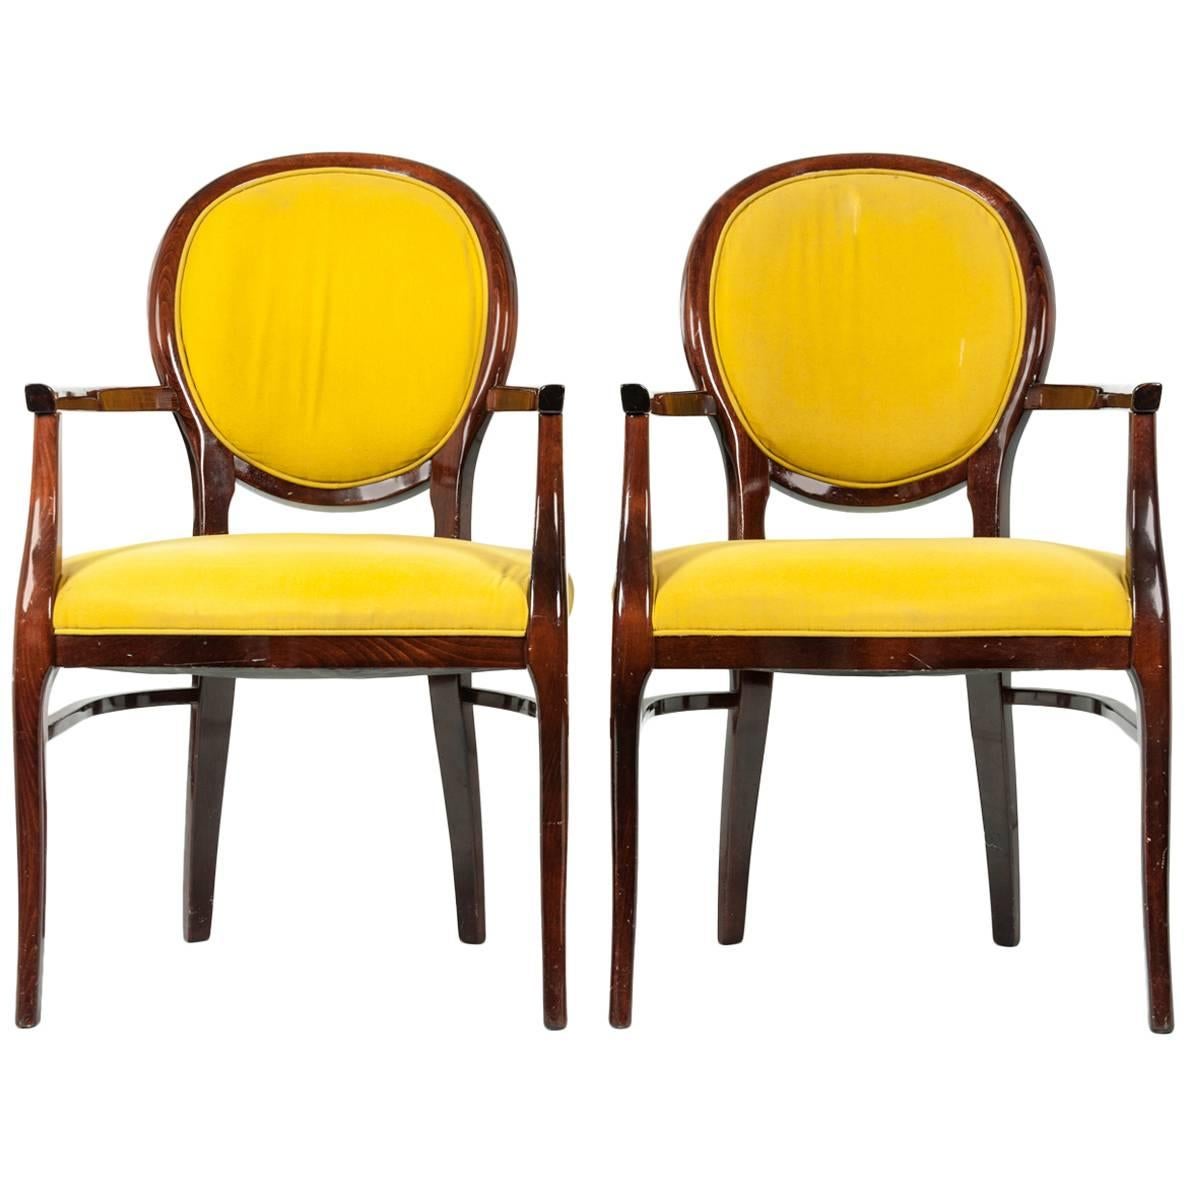 Mid-Century Modern Art Deco, Pair of Chairs